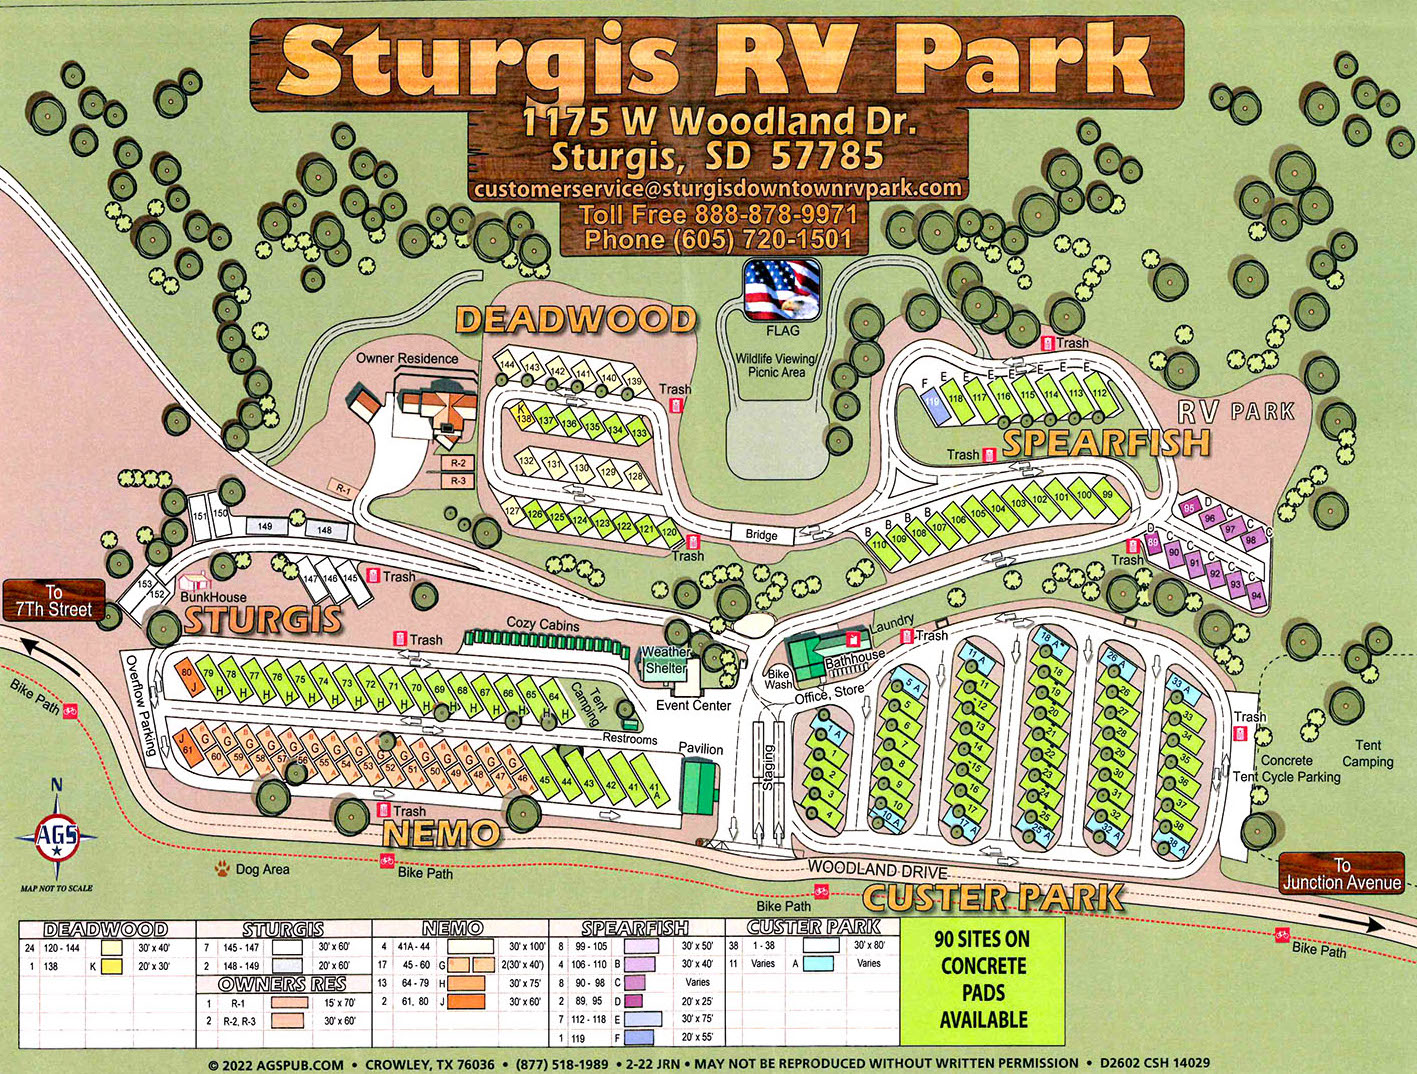 Sturgis RV Park Map